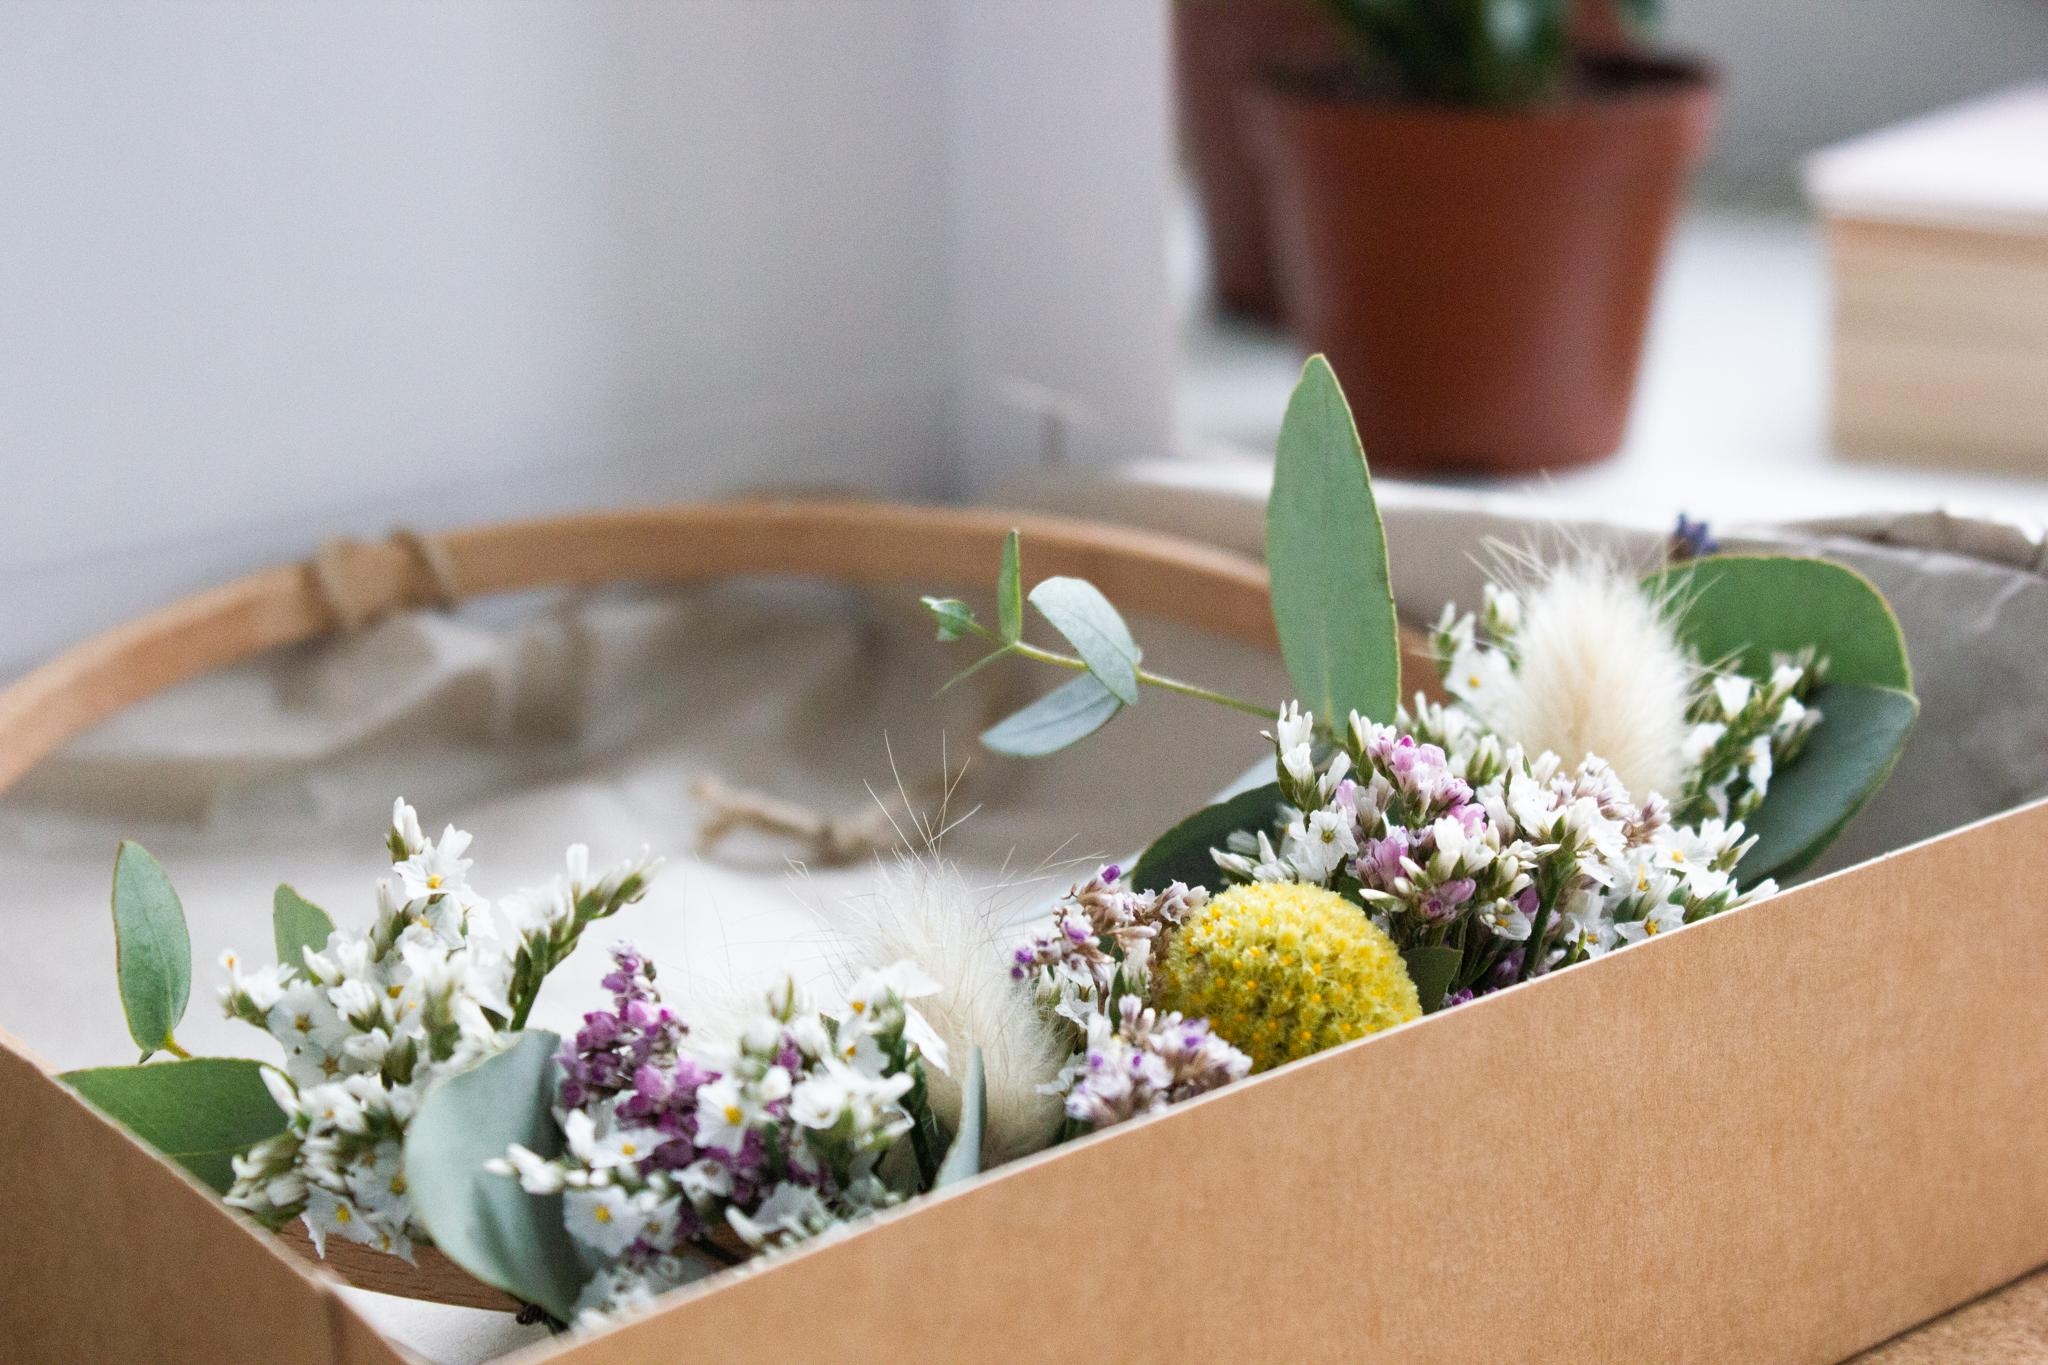 #blumenreifen #interior #handmade #bloominghoops #home #design #flowers #couchliebt